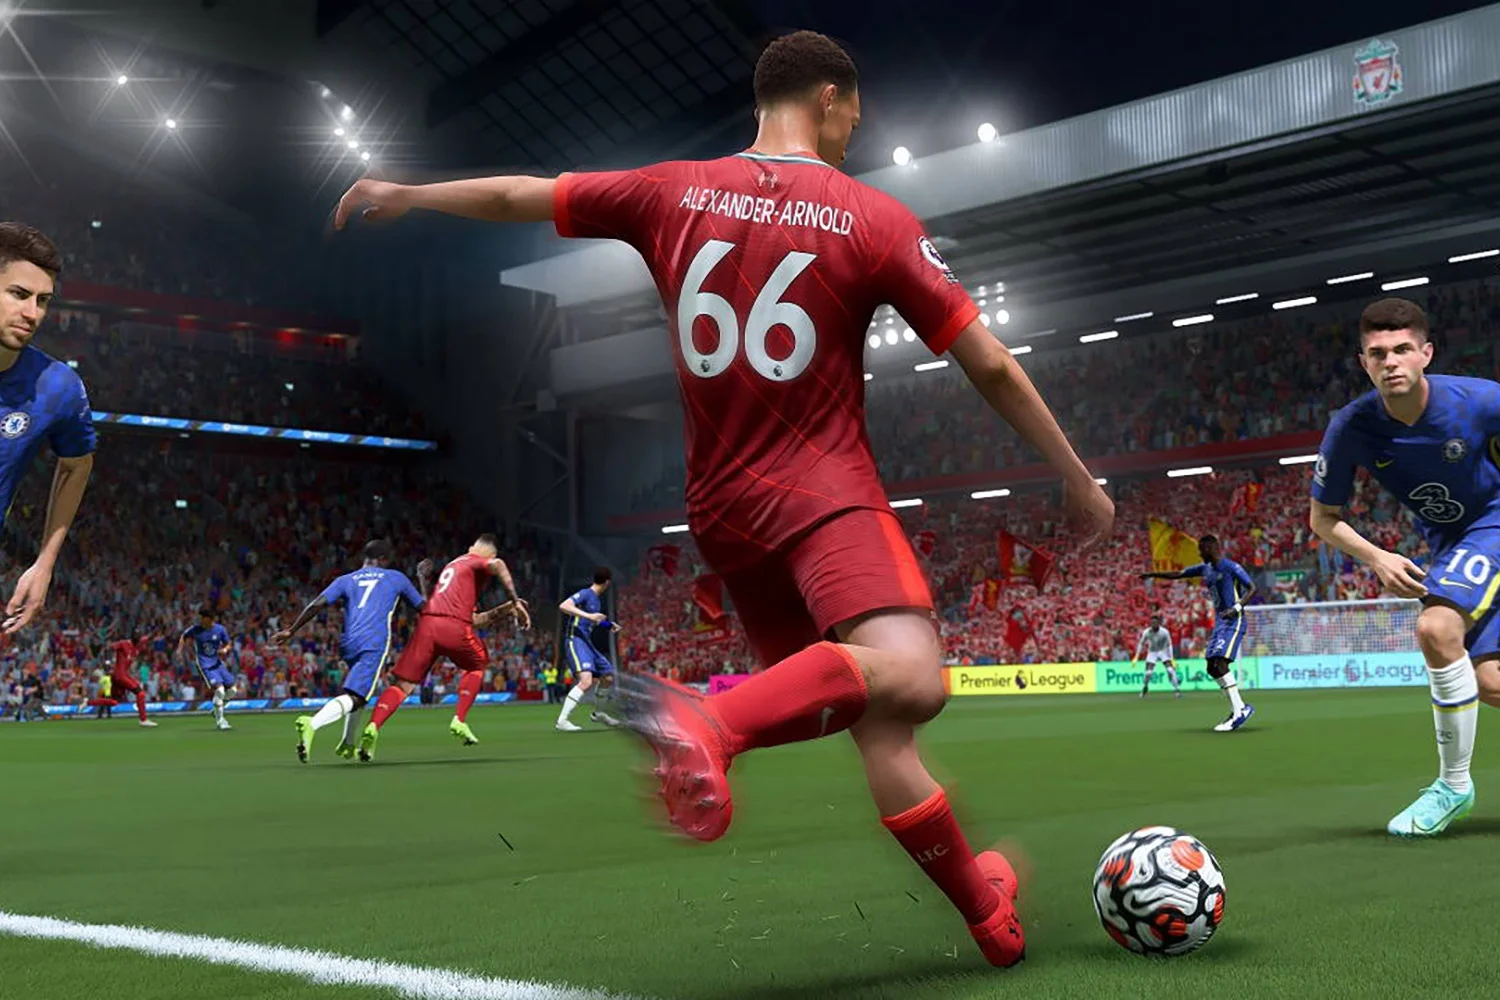 Electronic Arts will soon shut down FIFA 22 servers